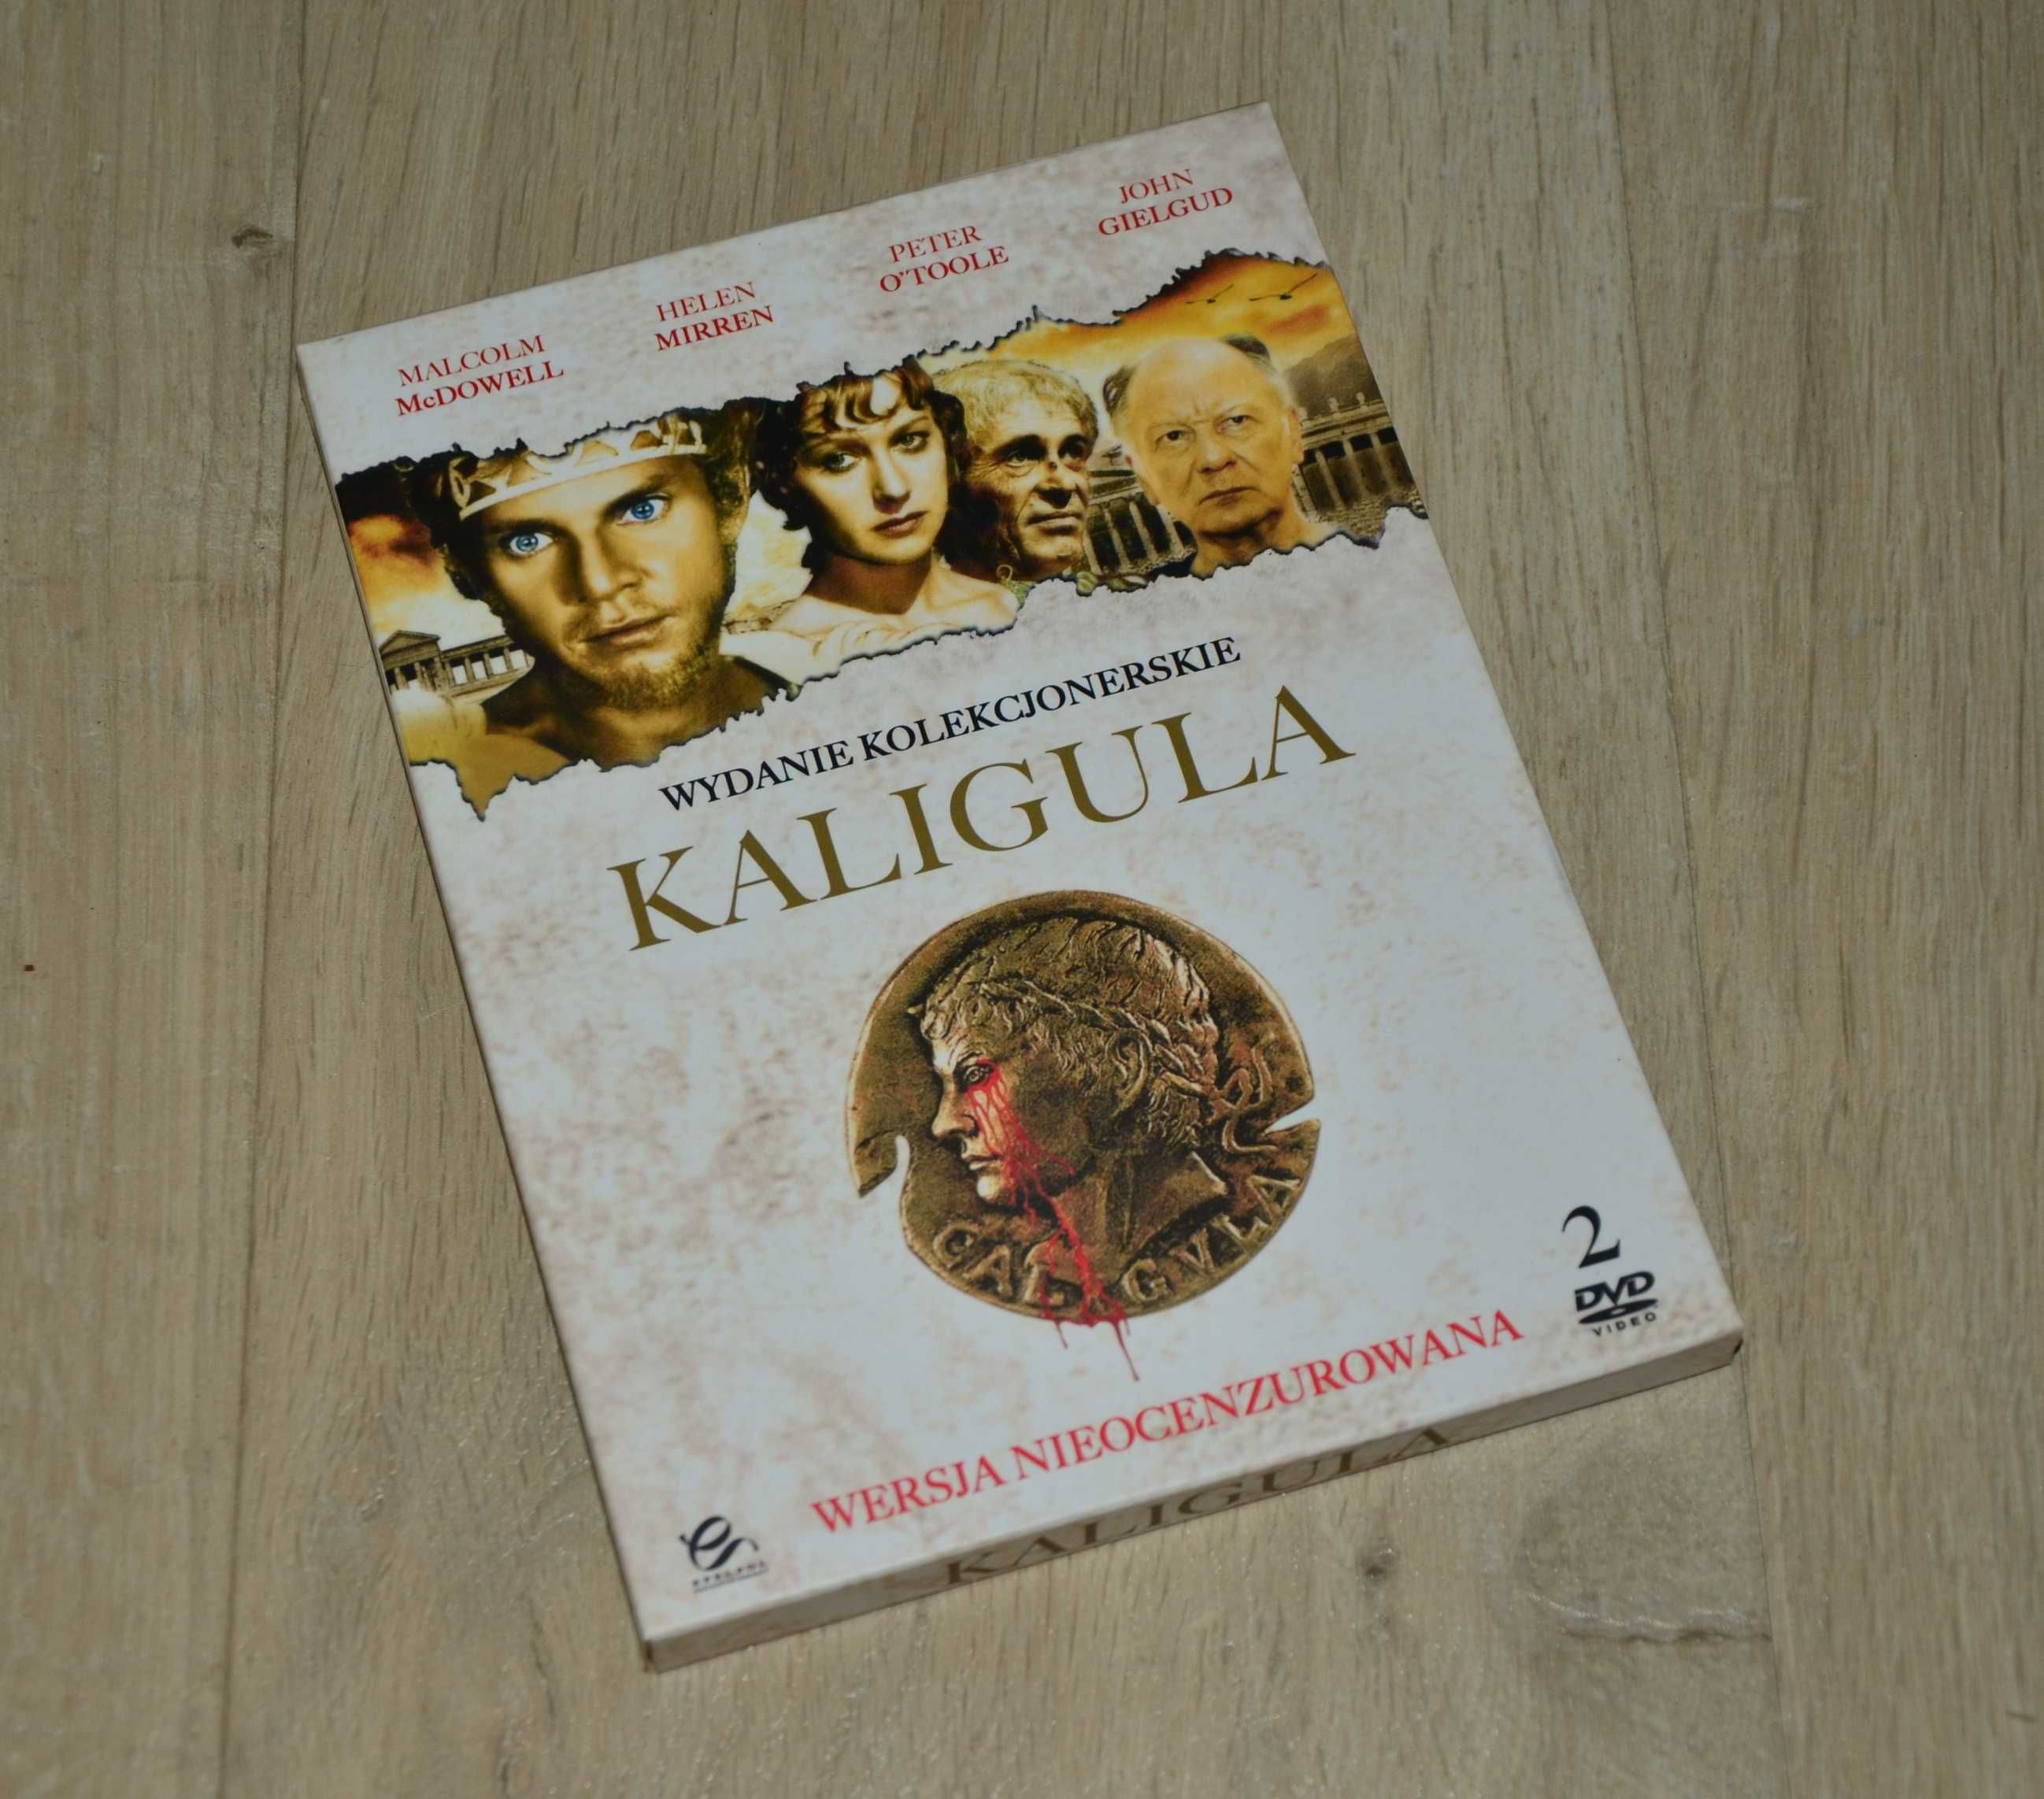 DVD | Kaligula 2xDVD Wersja Nieocenzurowana